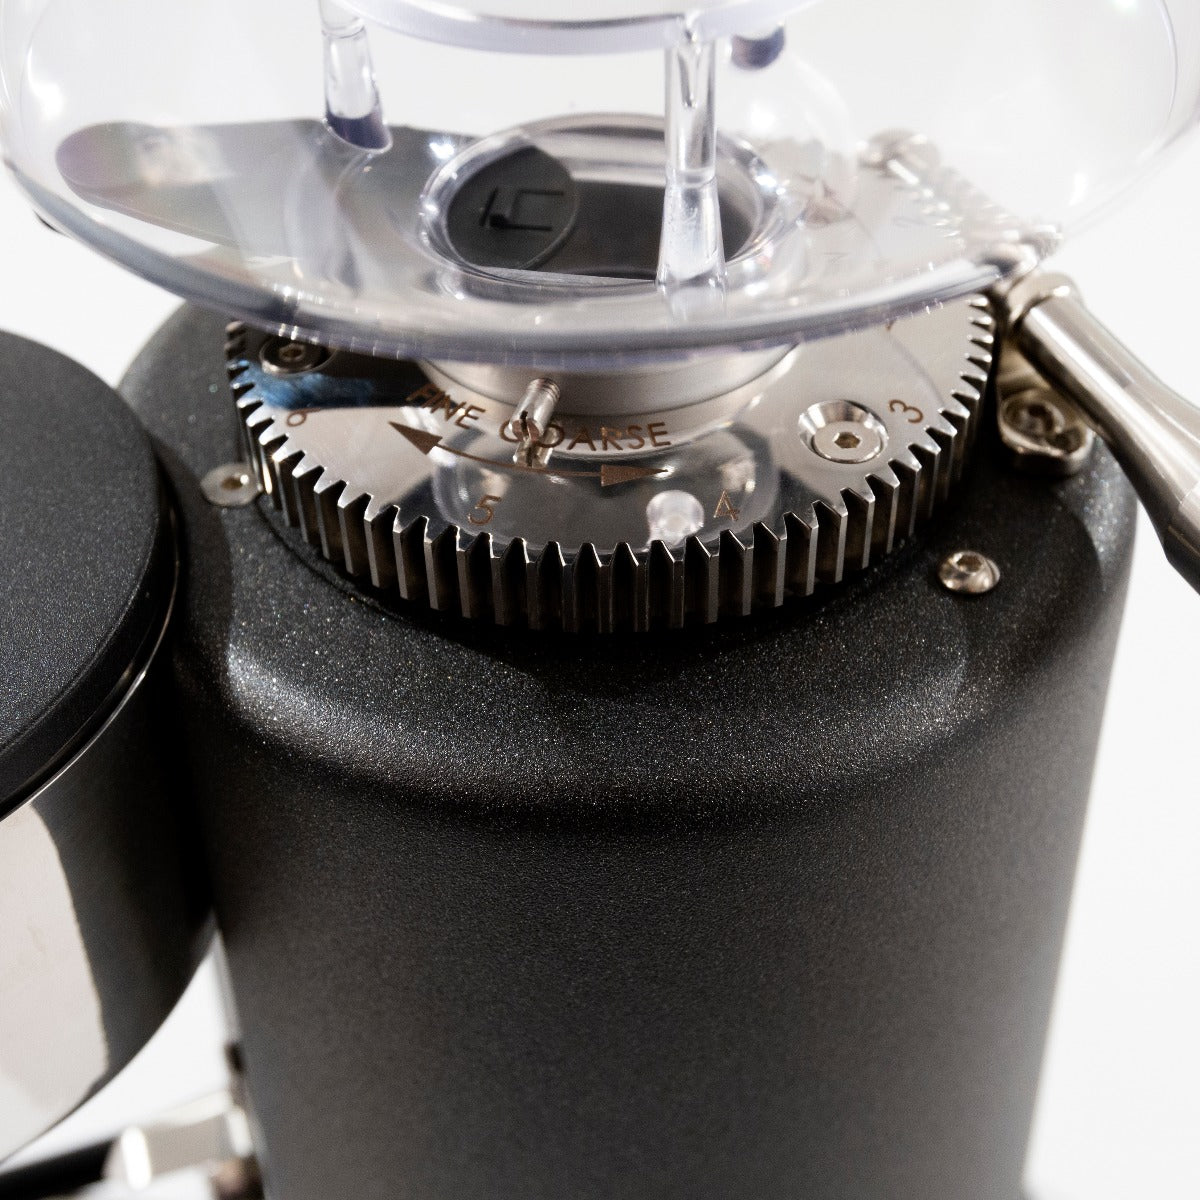 ECM V-Titan 64 Espresso Grinder in Anthracite – Whole Latte Love